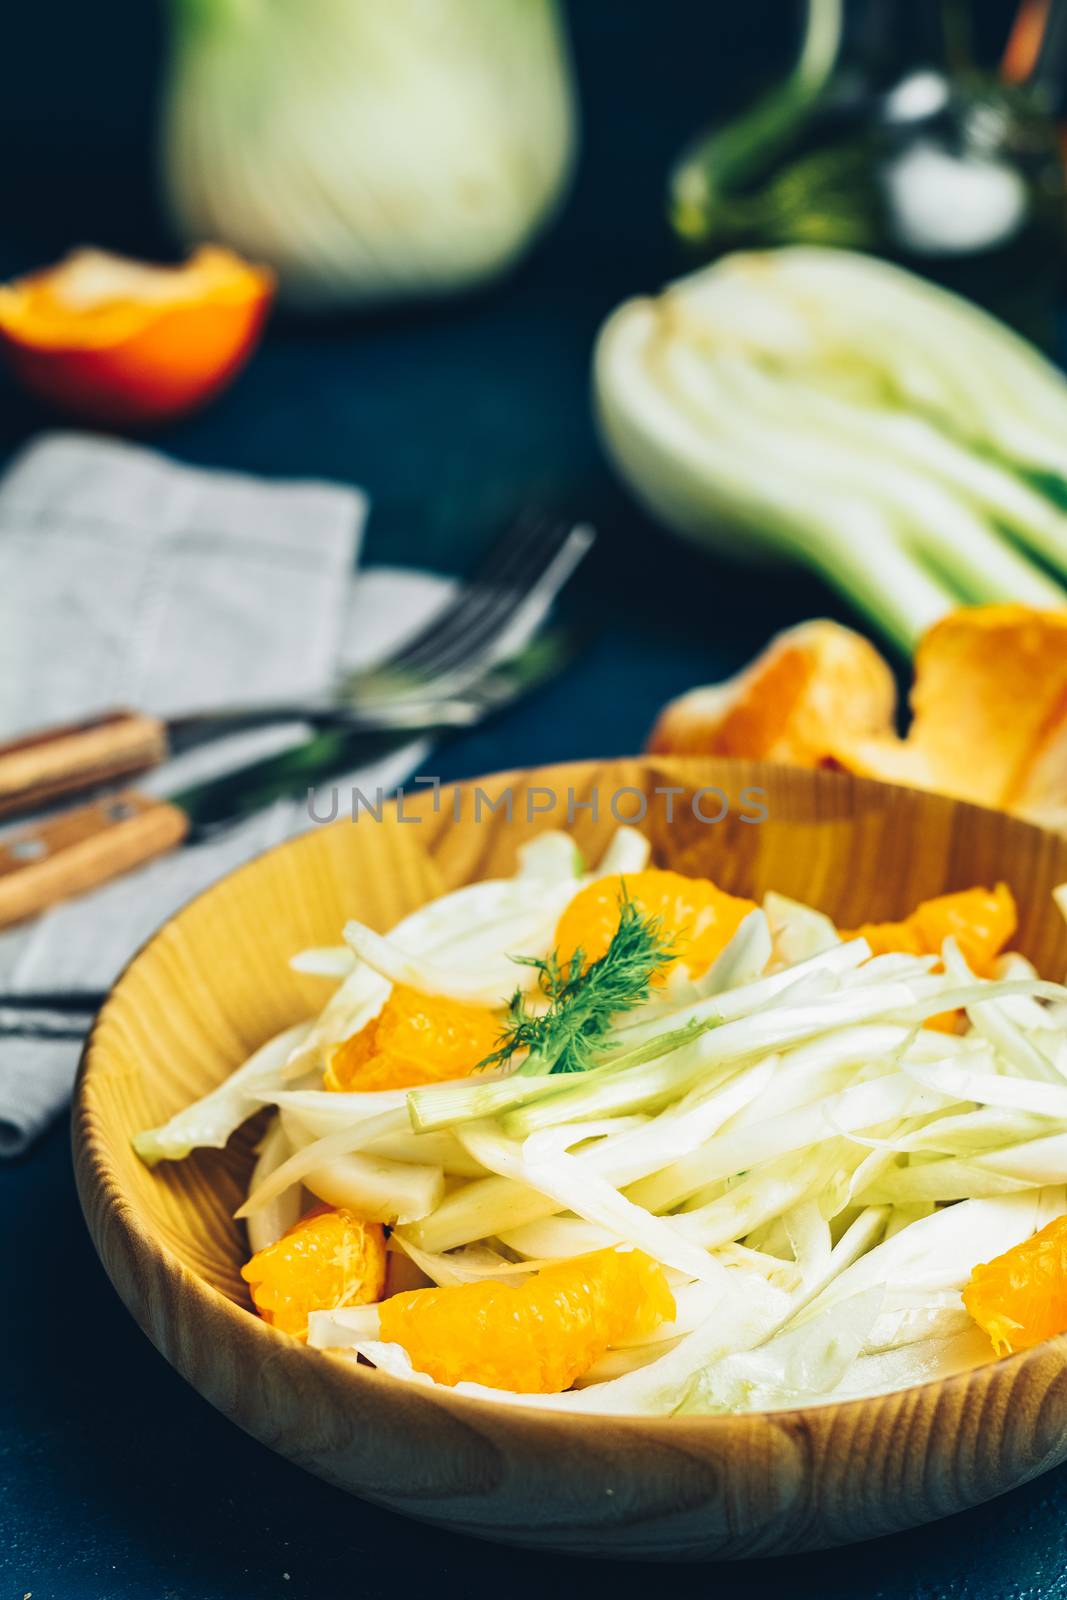 Fennel and orange citrus salad on wooden plate between ingredien by ArtSvitlyna